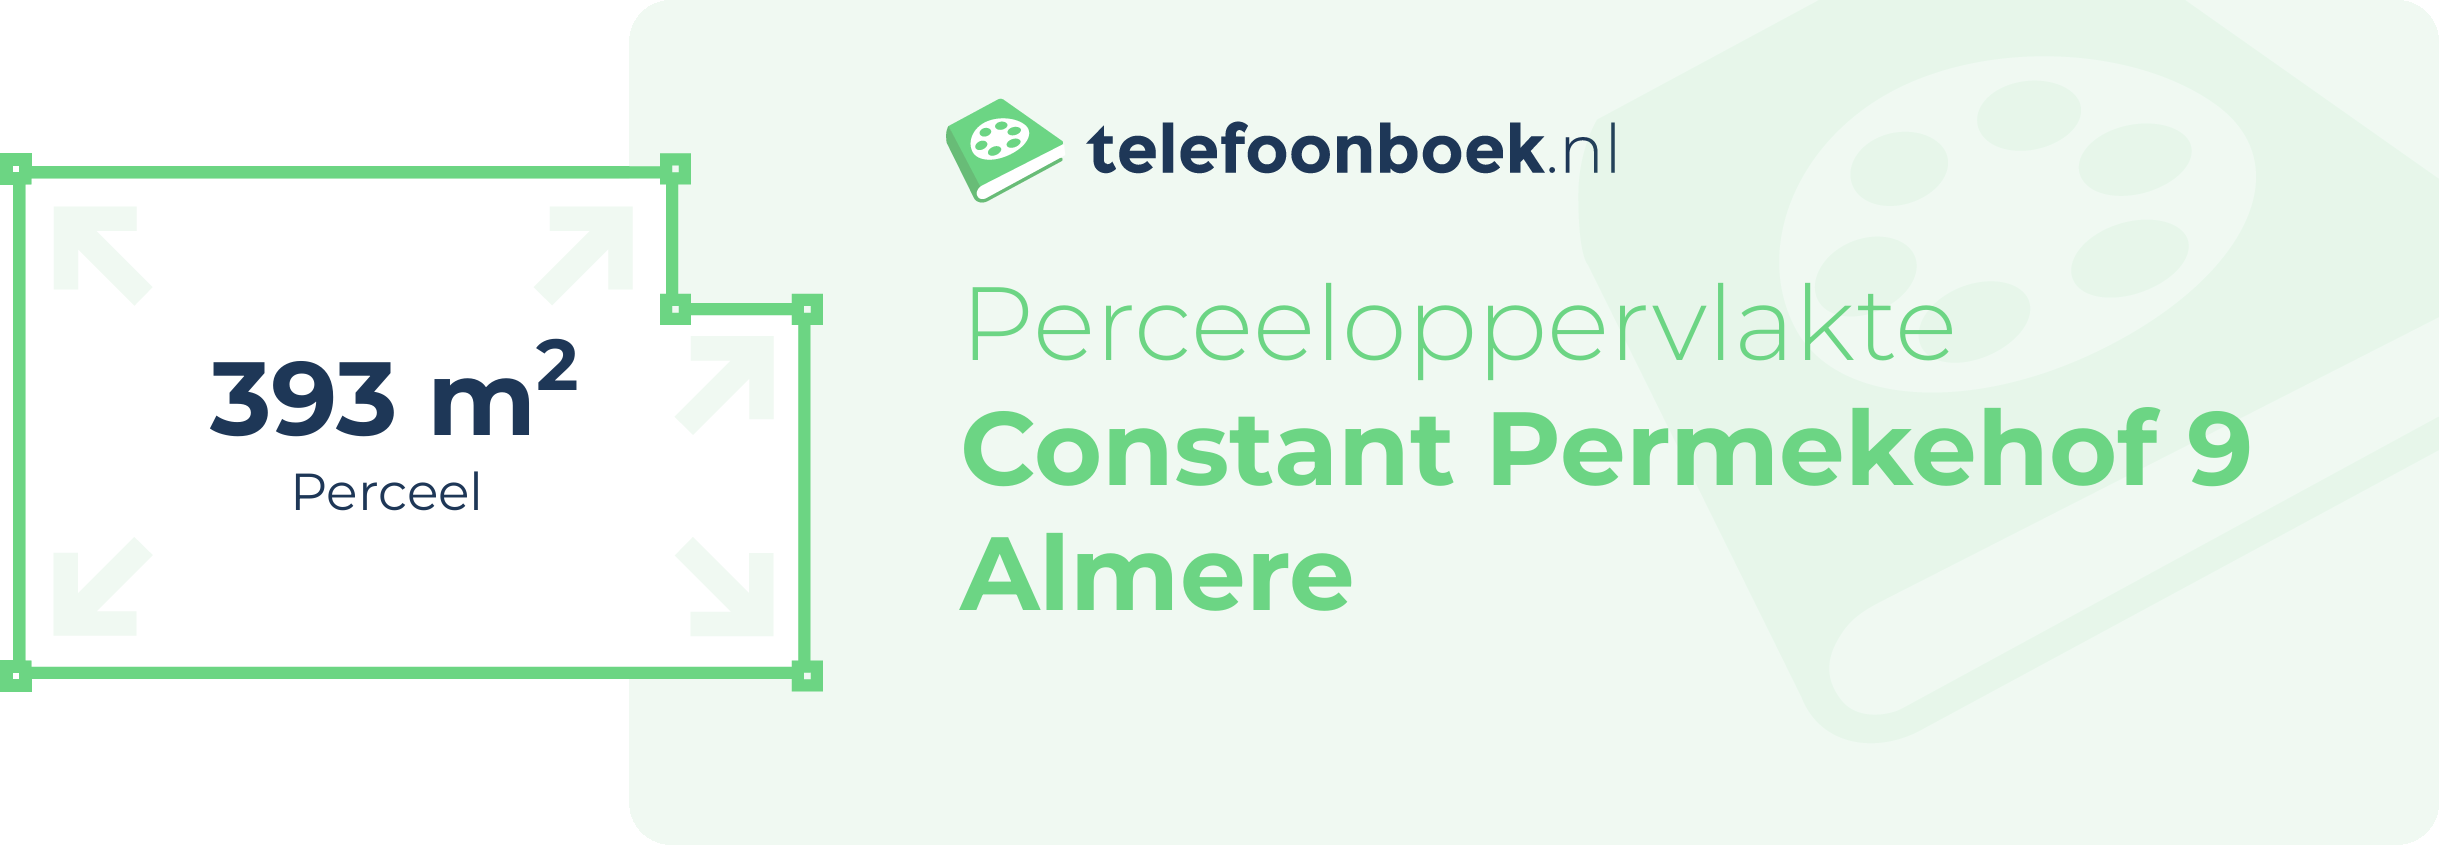 Perceeloppervlakte Constant Permekehof 9 Almere